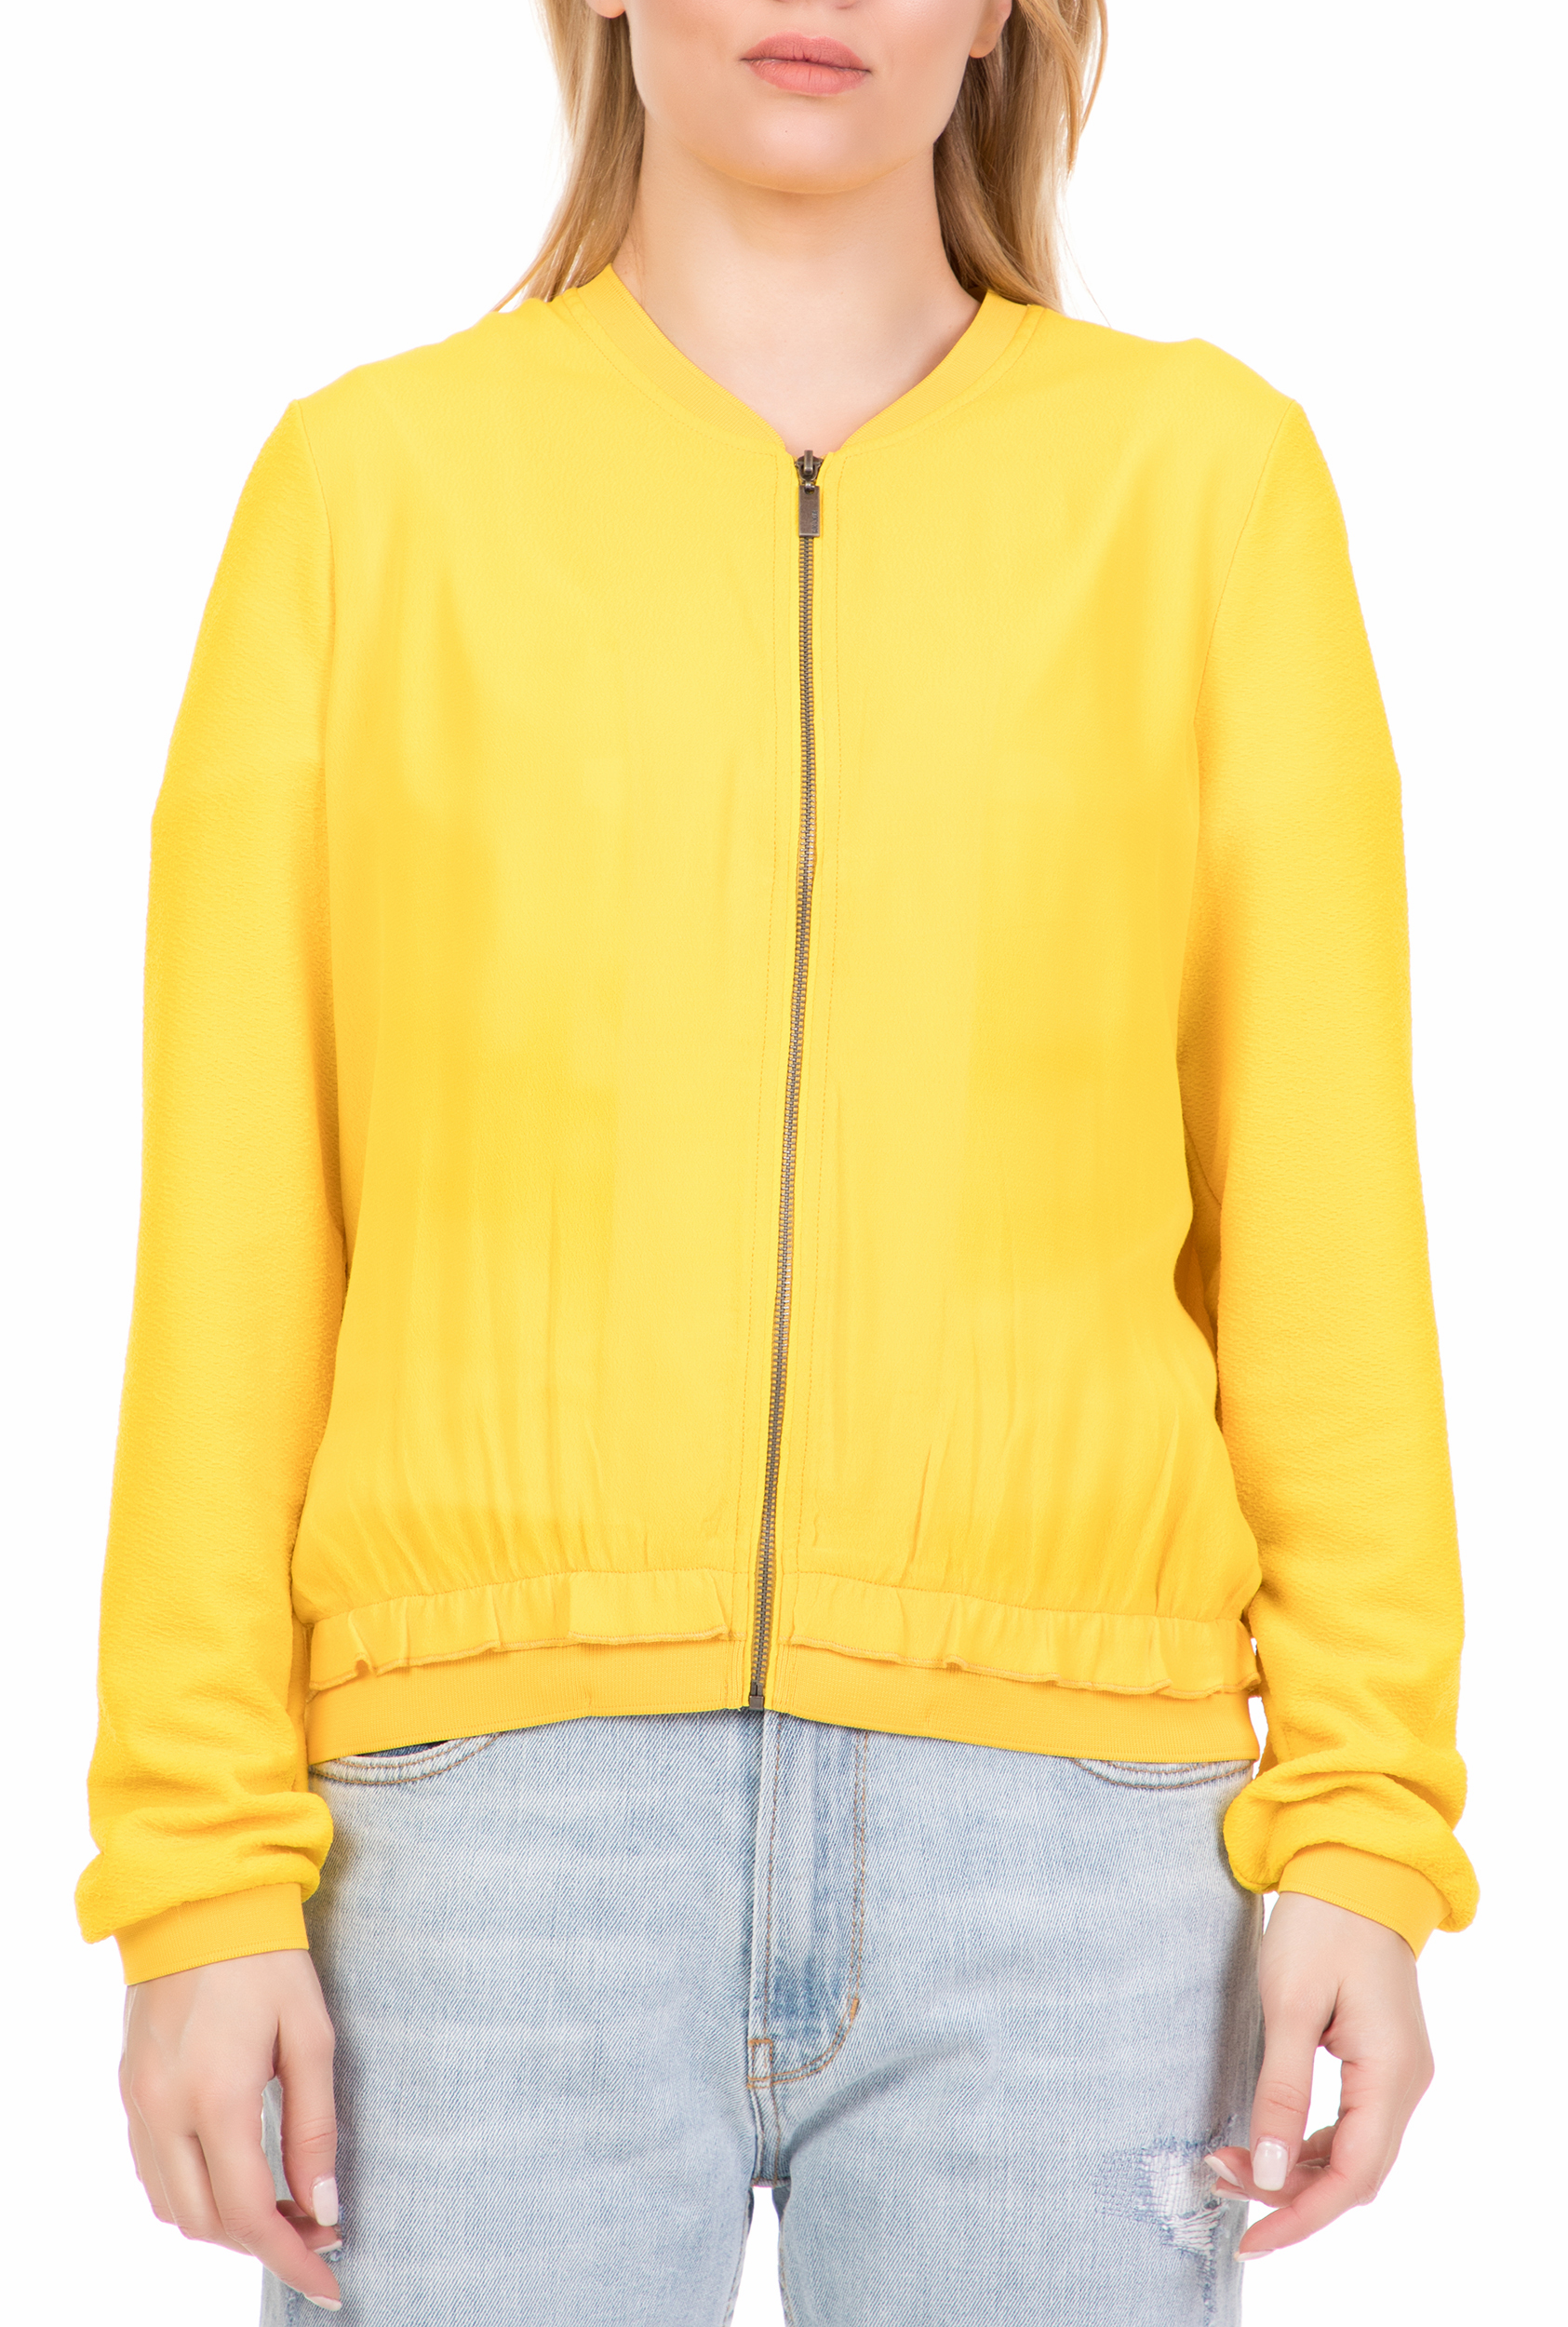 GARCIA JEANS - Γυναικείο jacket GARCIA JEANS κίτρινο Γυναικεία/Ρούχα/Πανωφόρια/Τζάκετς